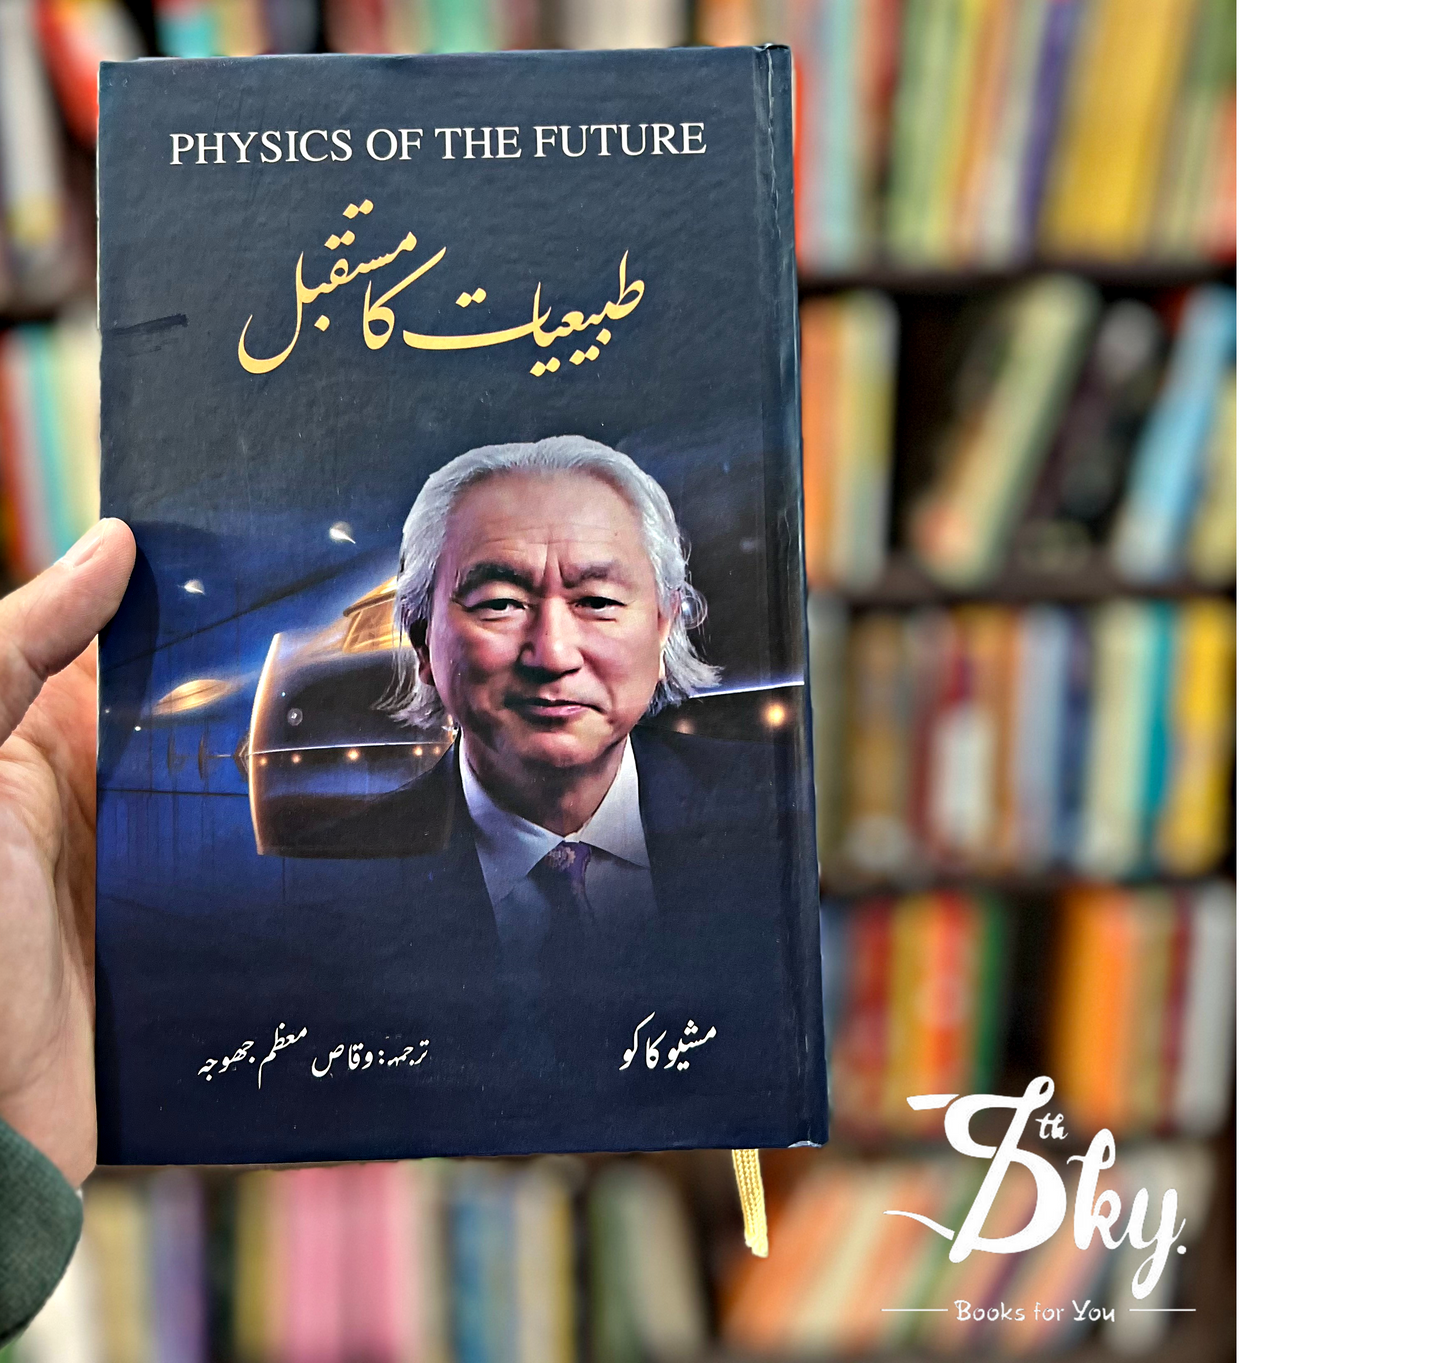 Physics of the future (Urdu version)